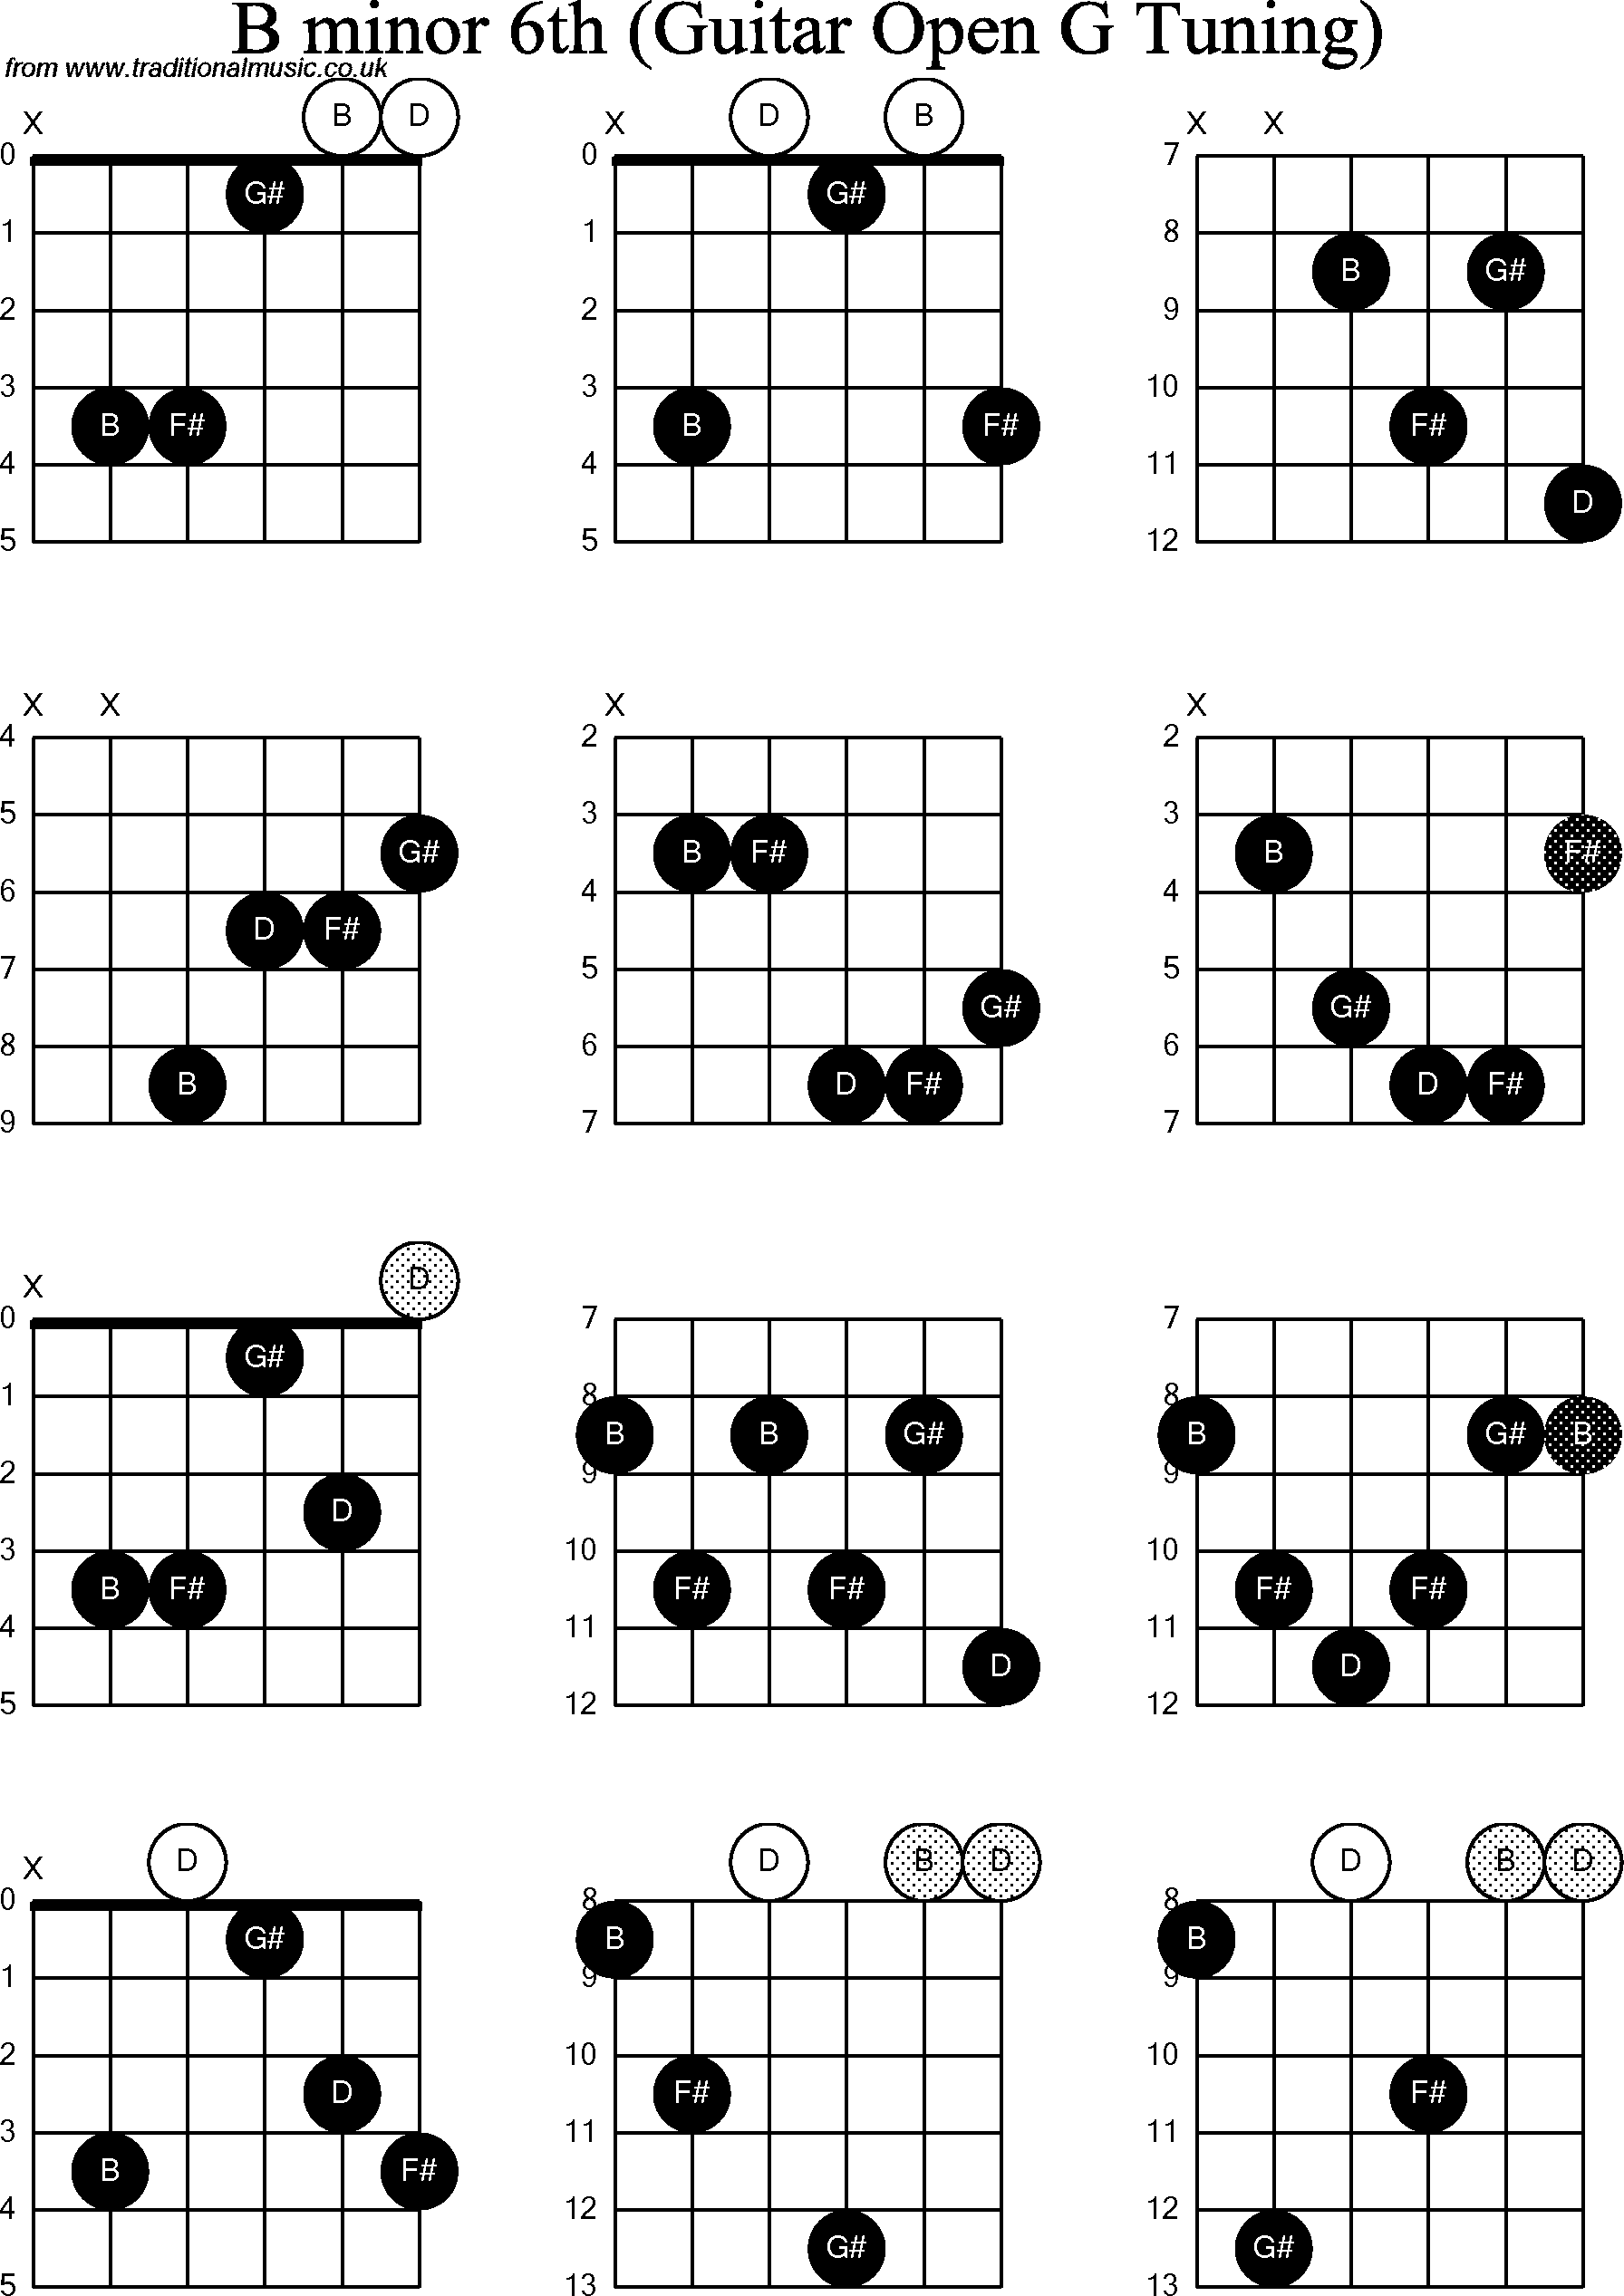 chord-diagrams-for-dobro-b-minor6th